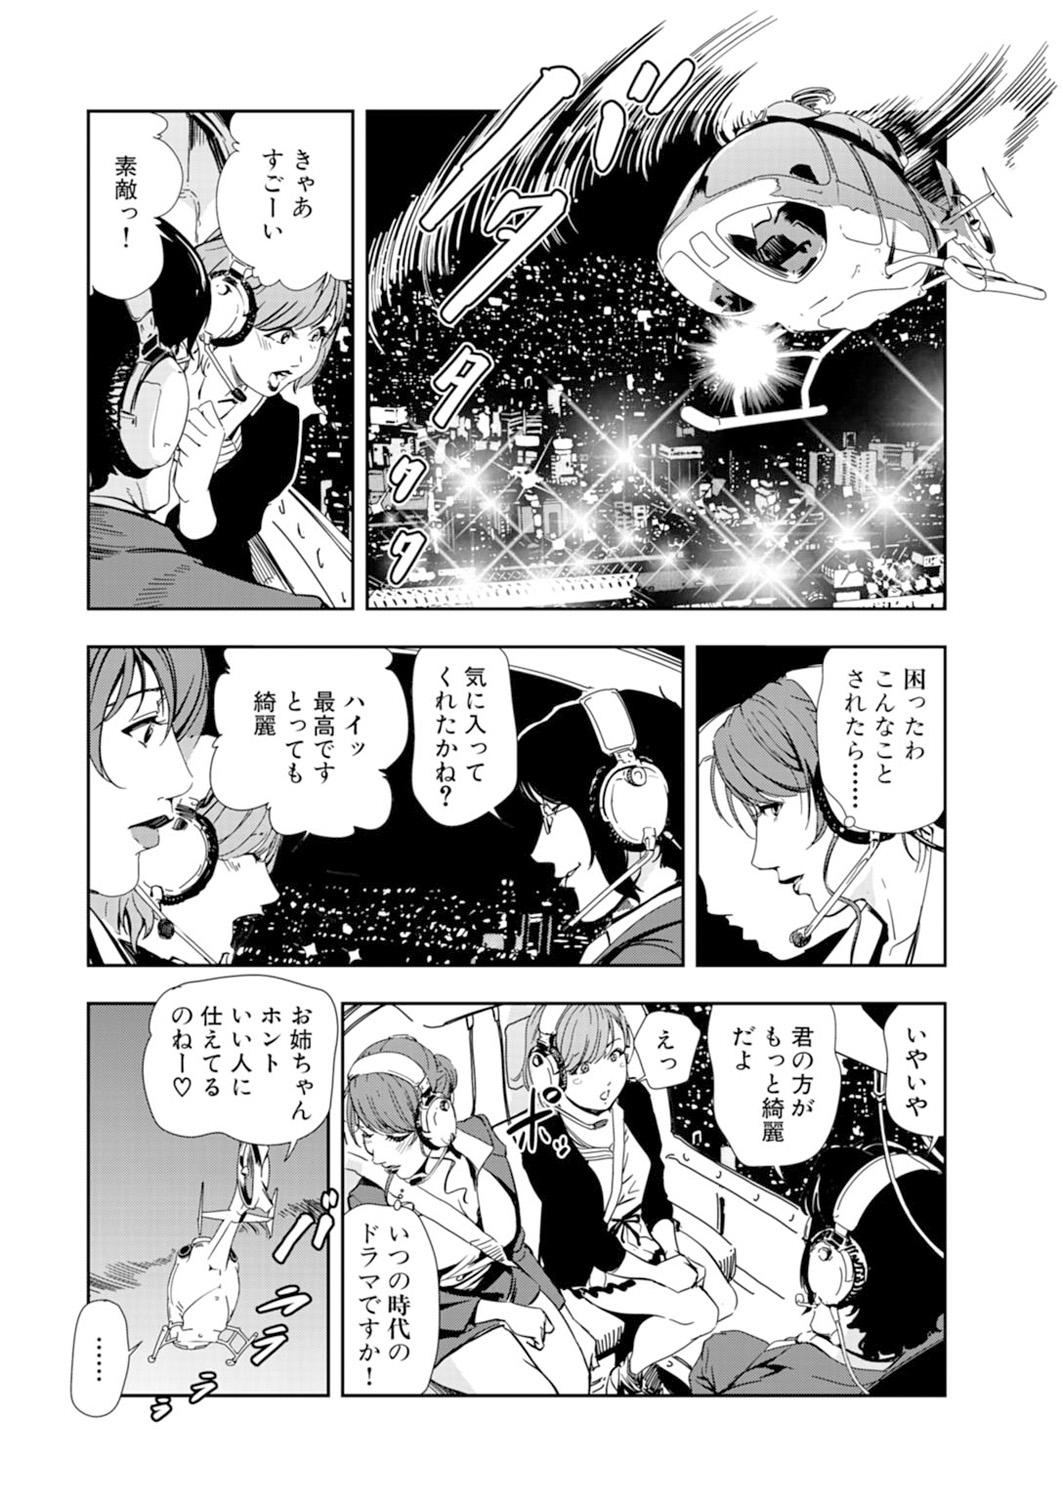 Pasivo Nikuhisyo Yukiko 14 De Quatro - Page 8